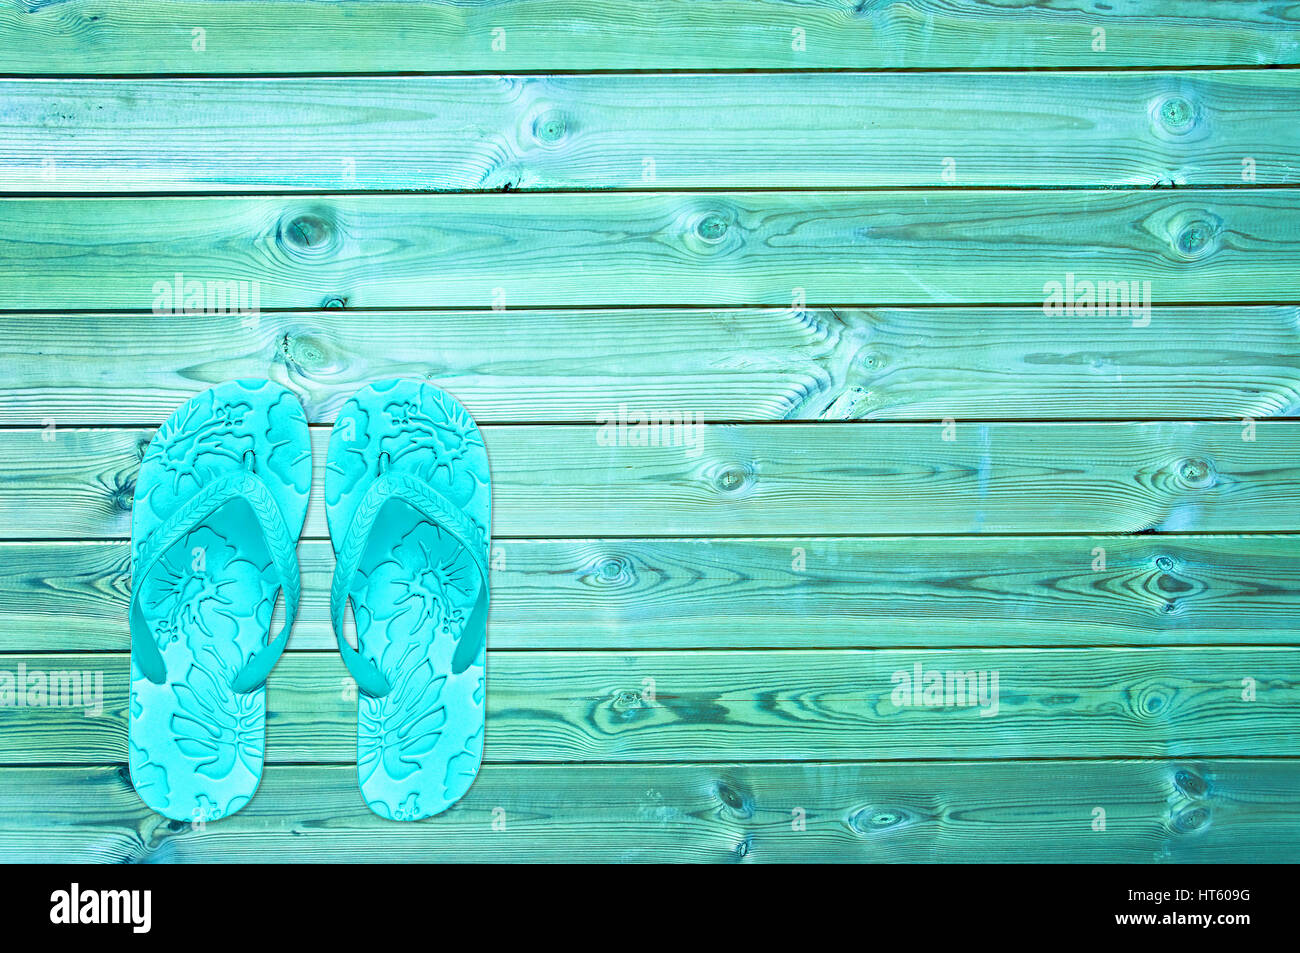 Blue flip-flops on wooden planks background Stock Photo